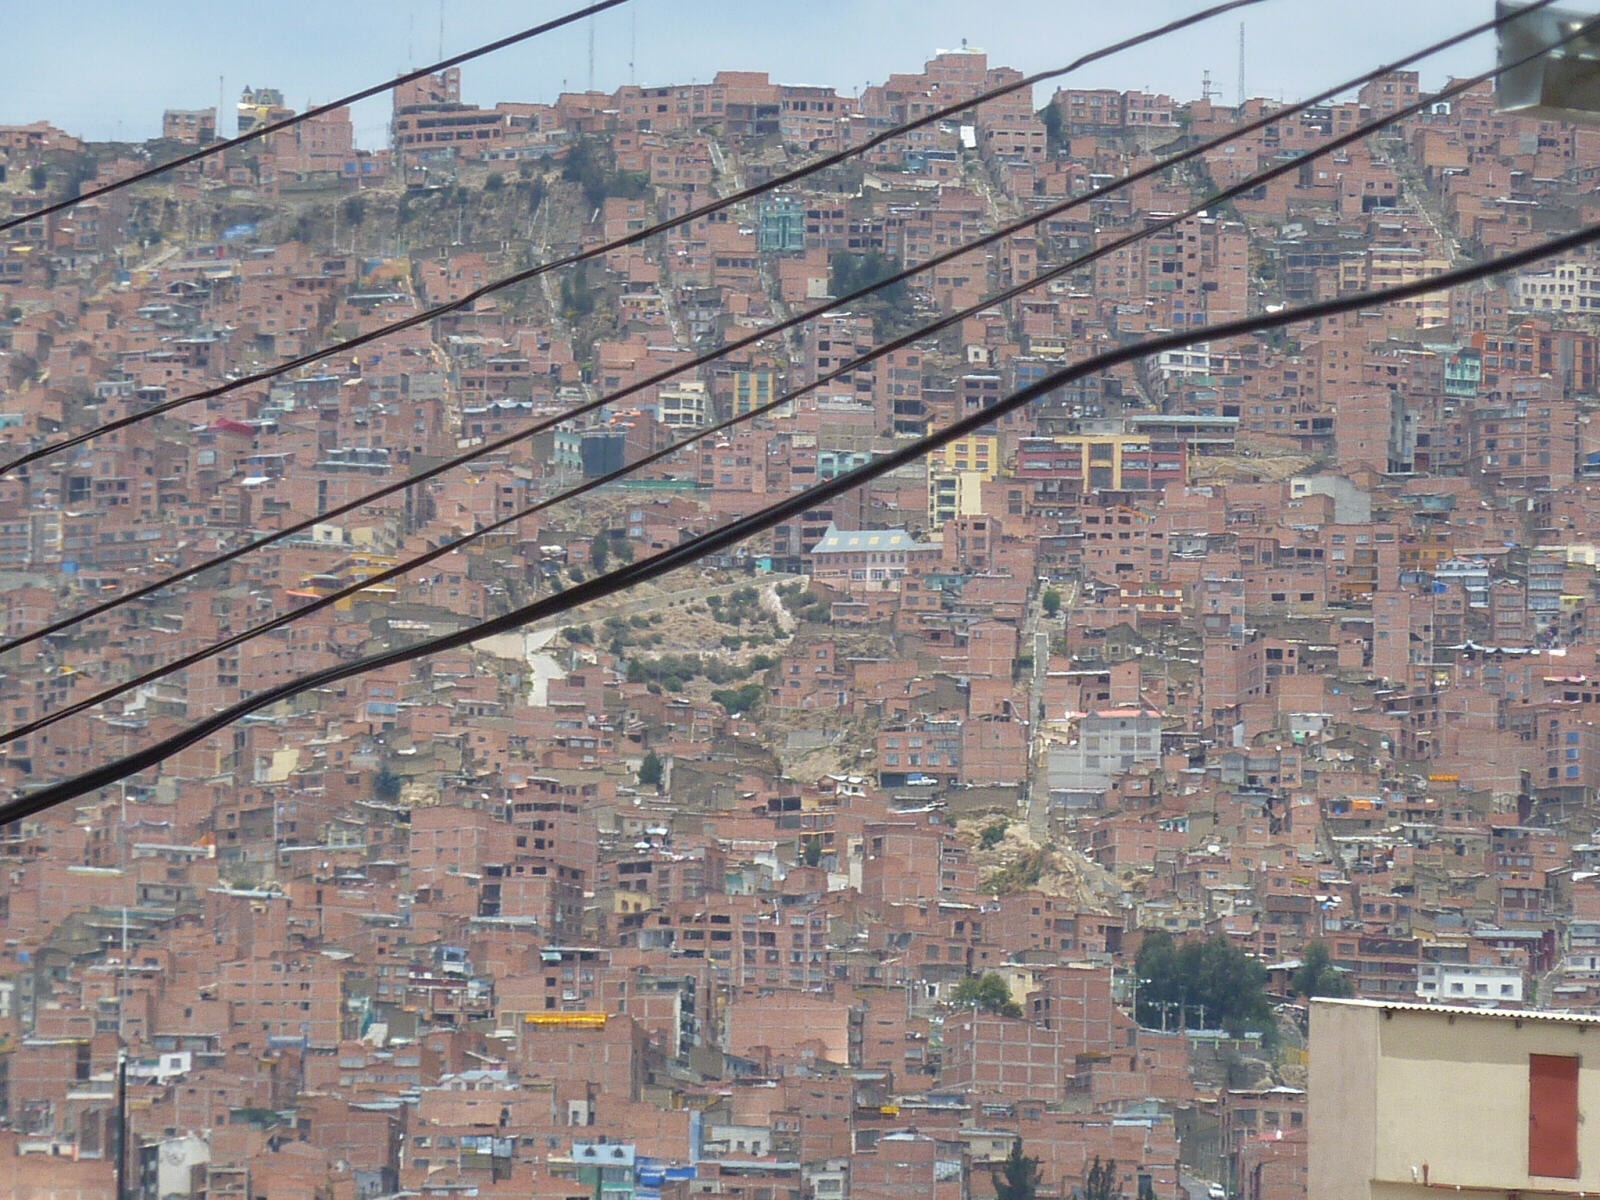 Barrios and shanty towns above La Paz, Bolivia